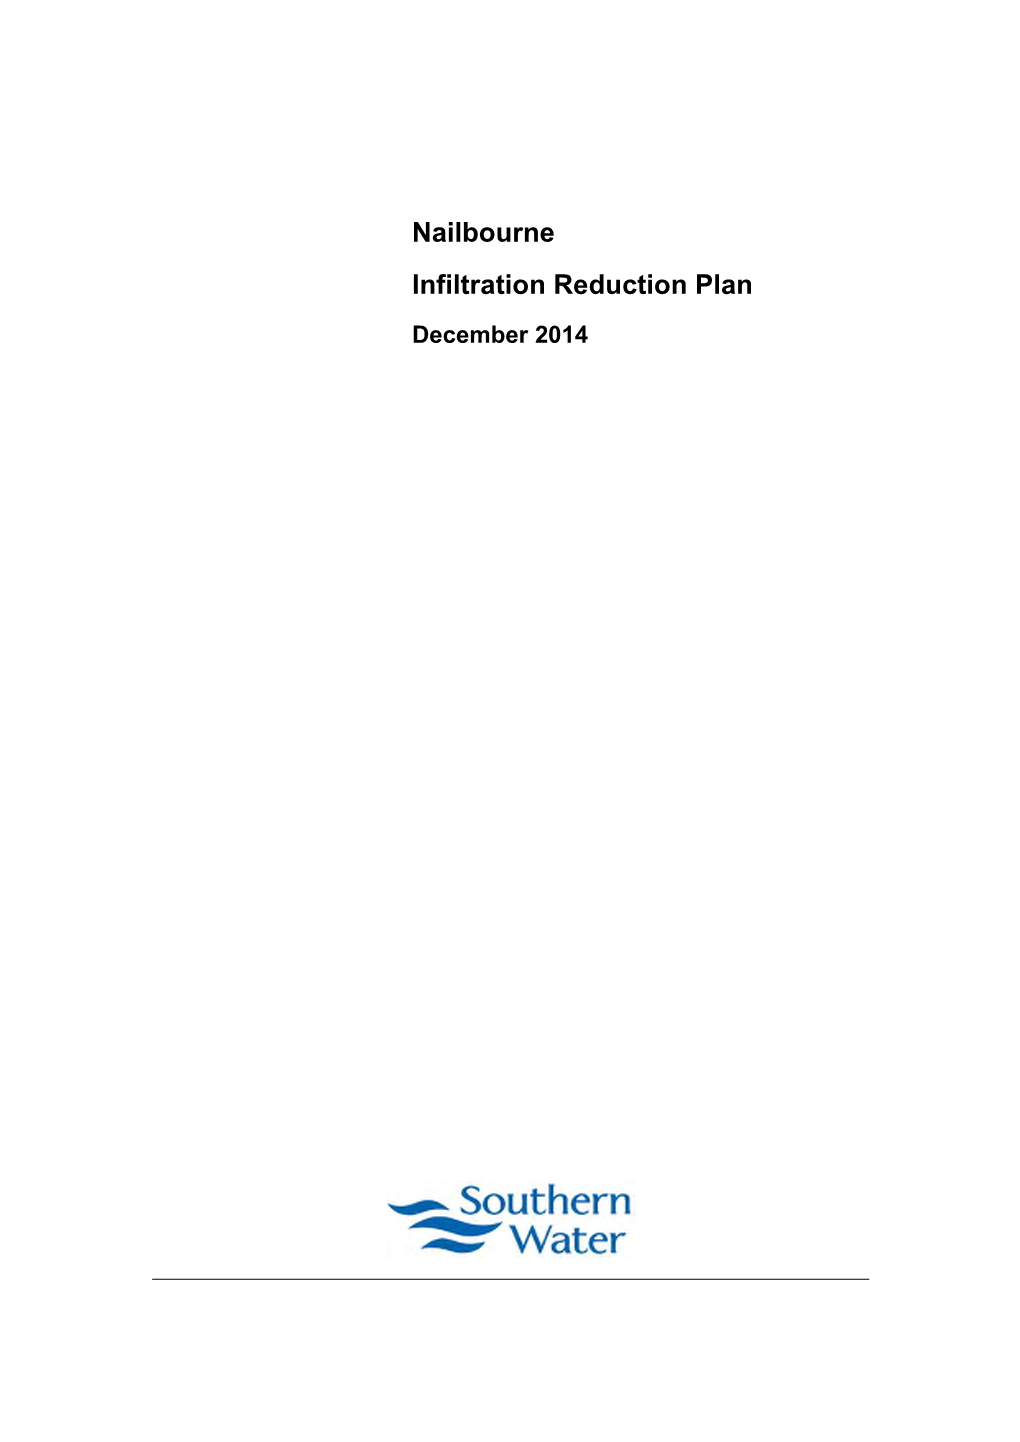 Nailbourne Infiltration Reduction Plan December 2014